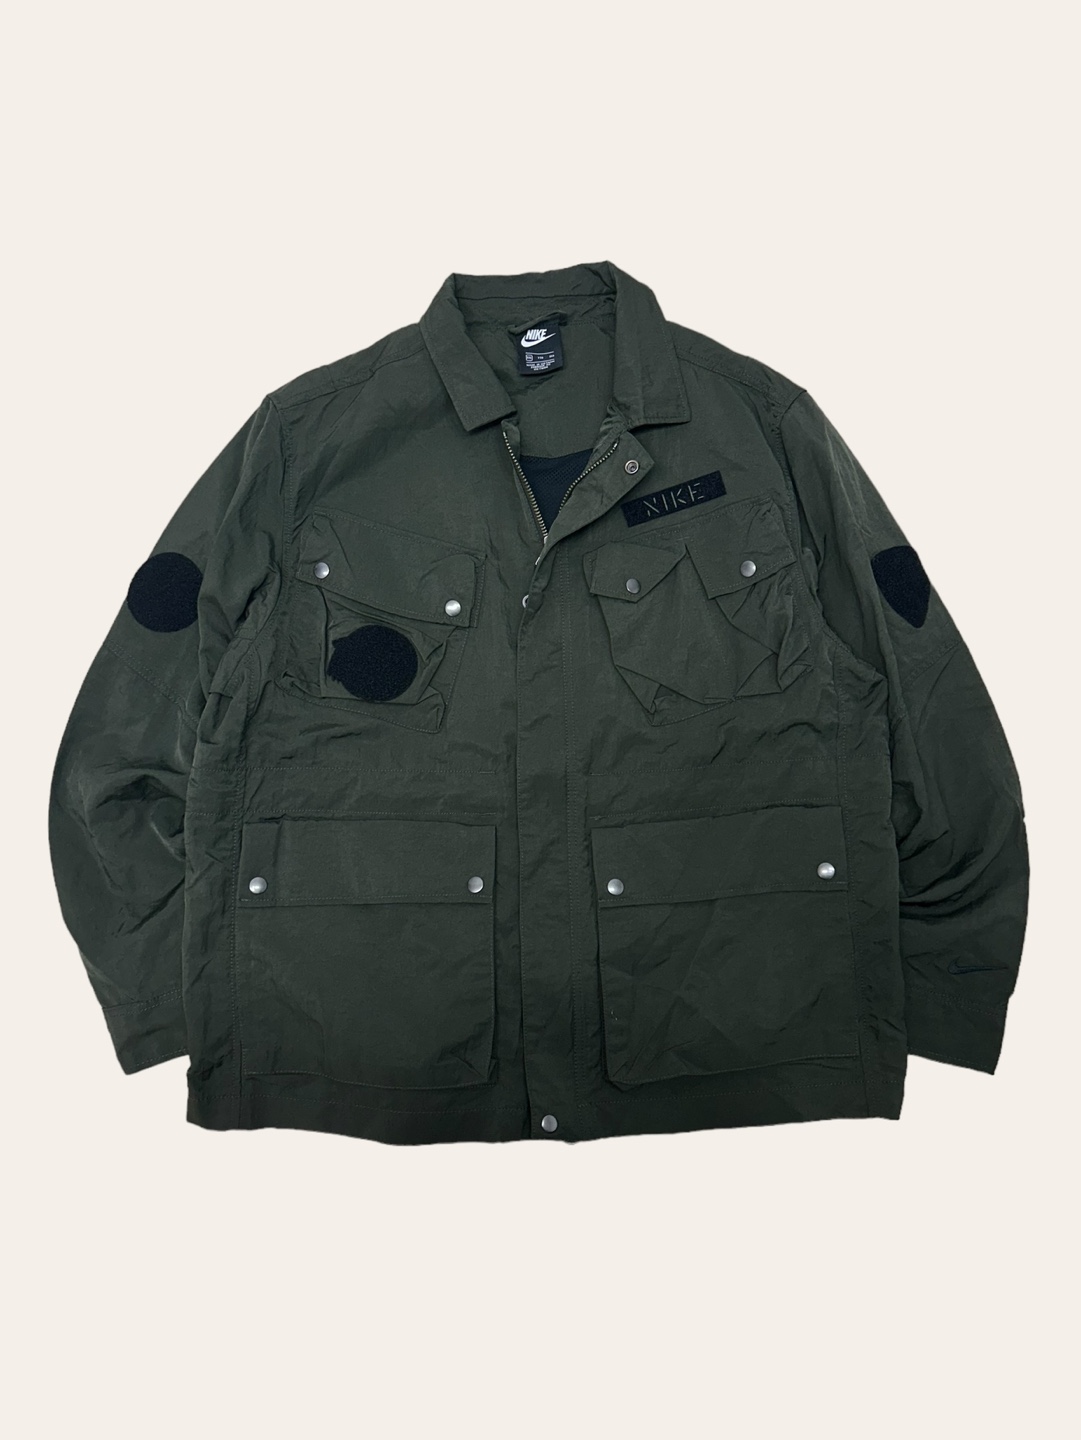 Nike khaki color nylon military jacket XXL